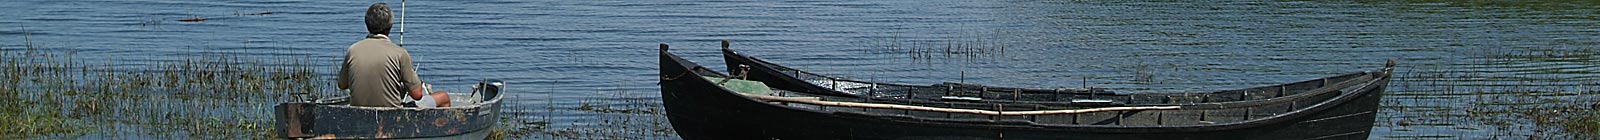 Fisherman Romania, Danube delta Banner